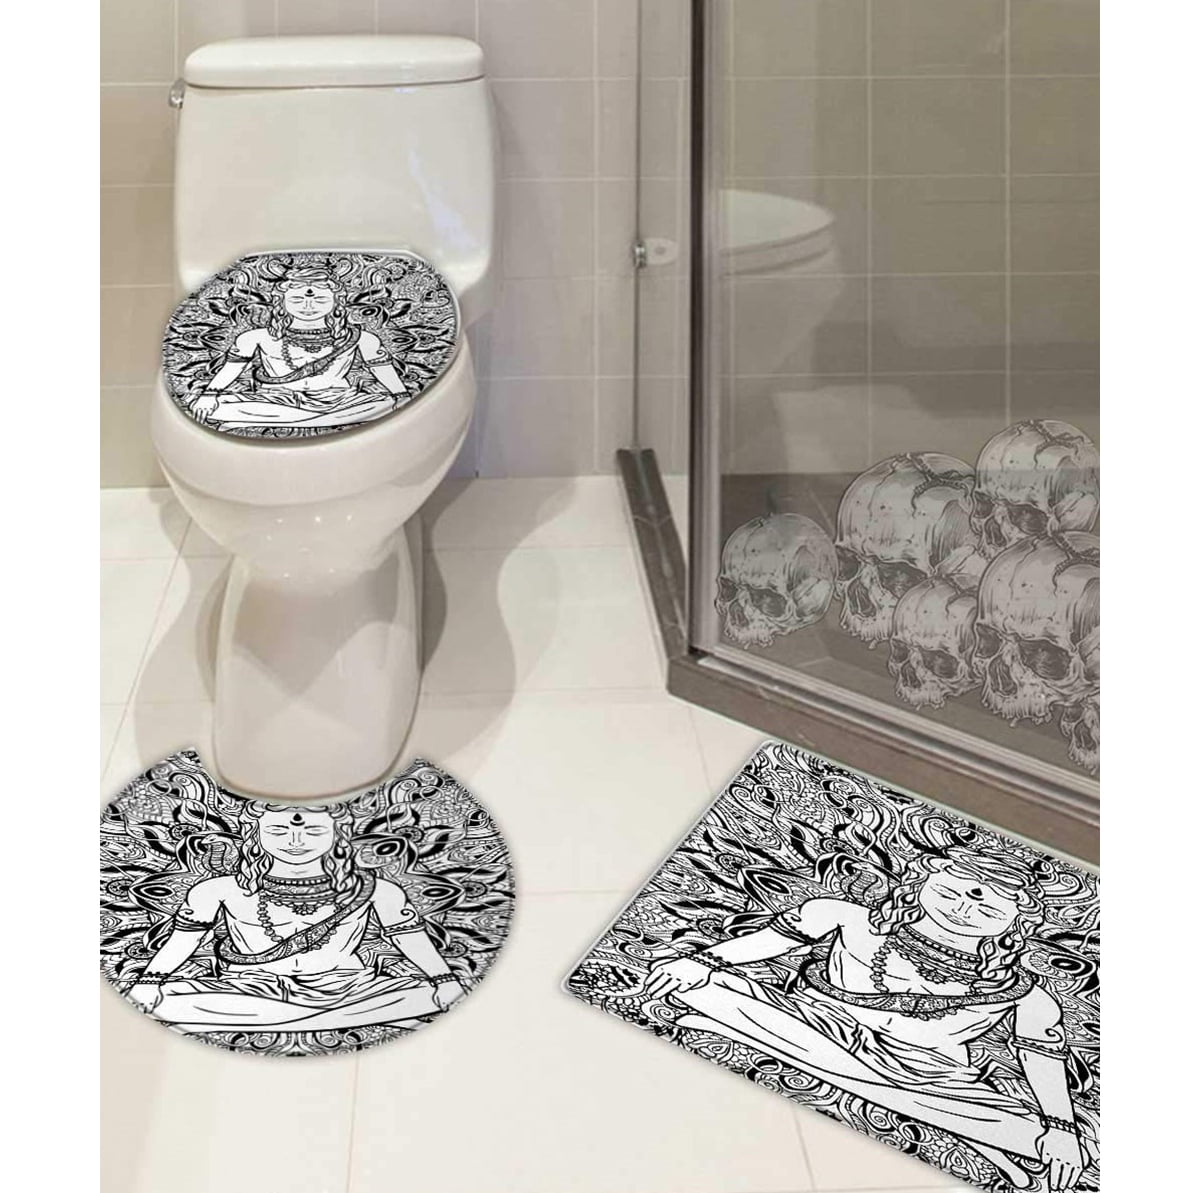 Lord Shiva Toilet Cover Set at Amazon; May 2, 2019